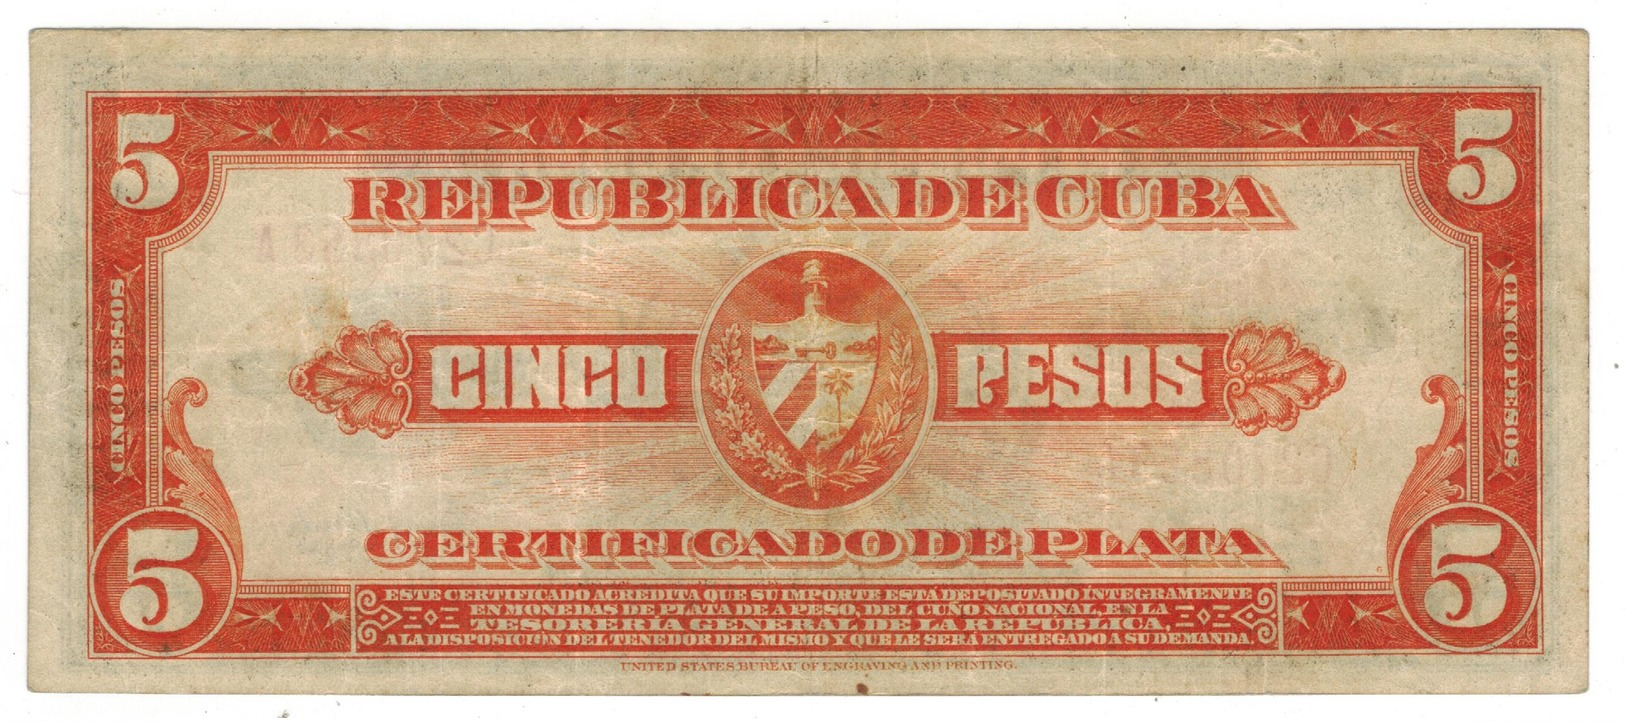 Cuba 5 Pesos Certificado De Plata, 1938, Crisp VF. Rare. SEE DESCRIPTION CAREFULLY. - Cuba